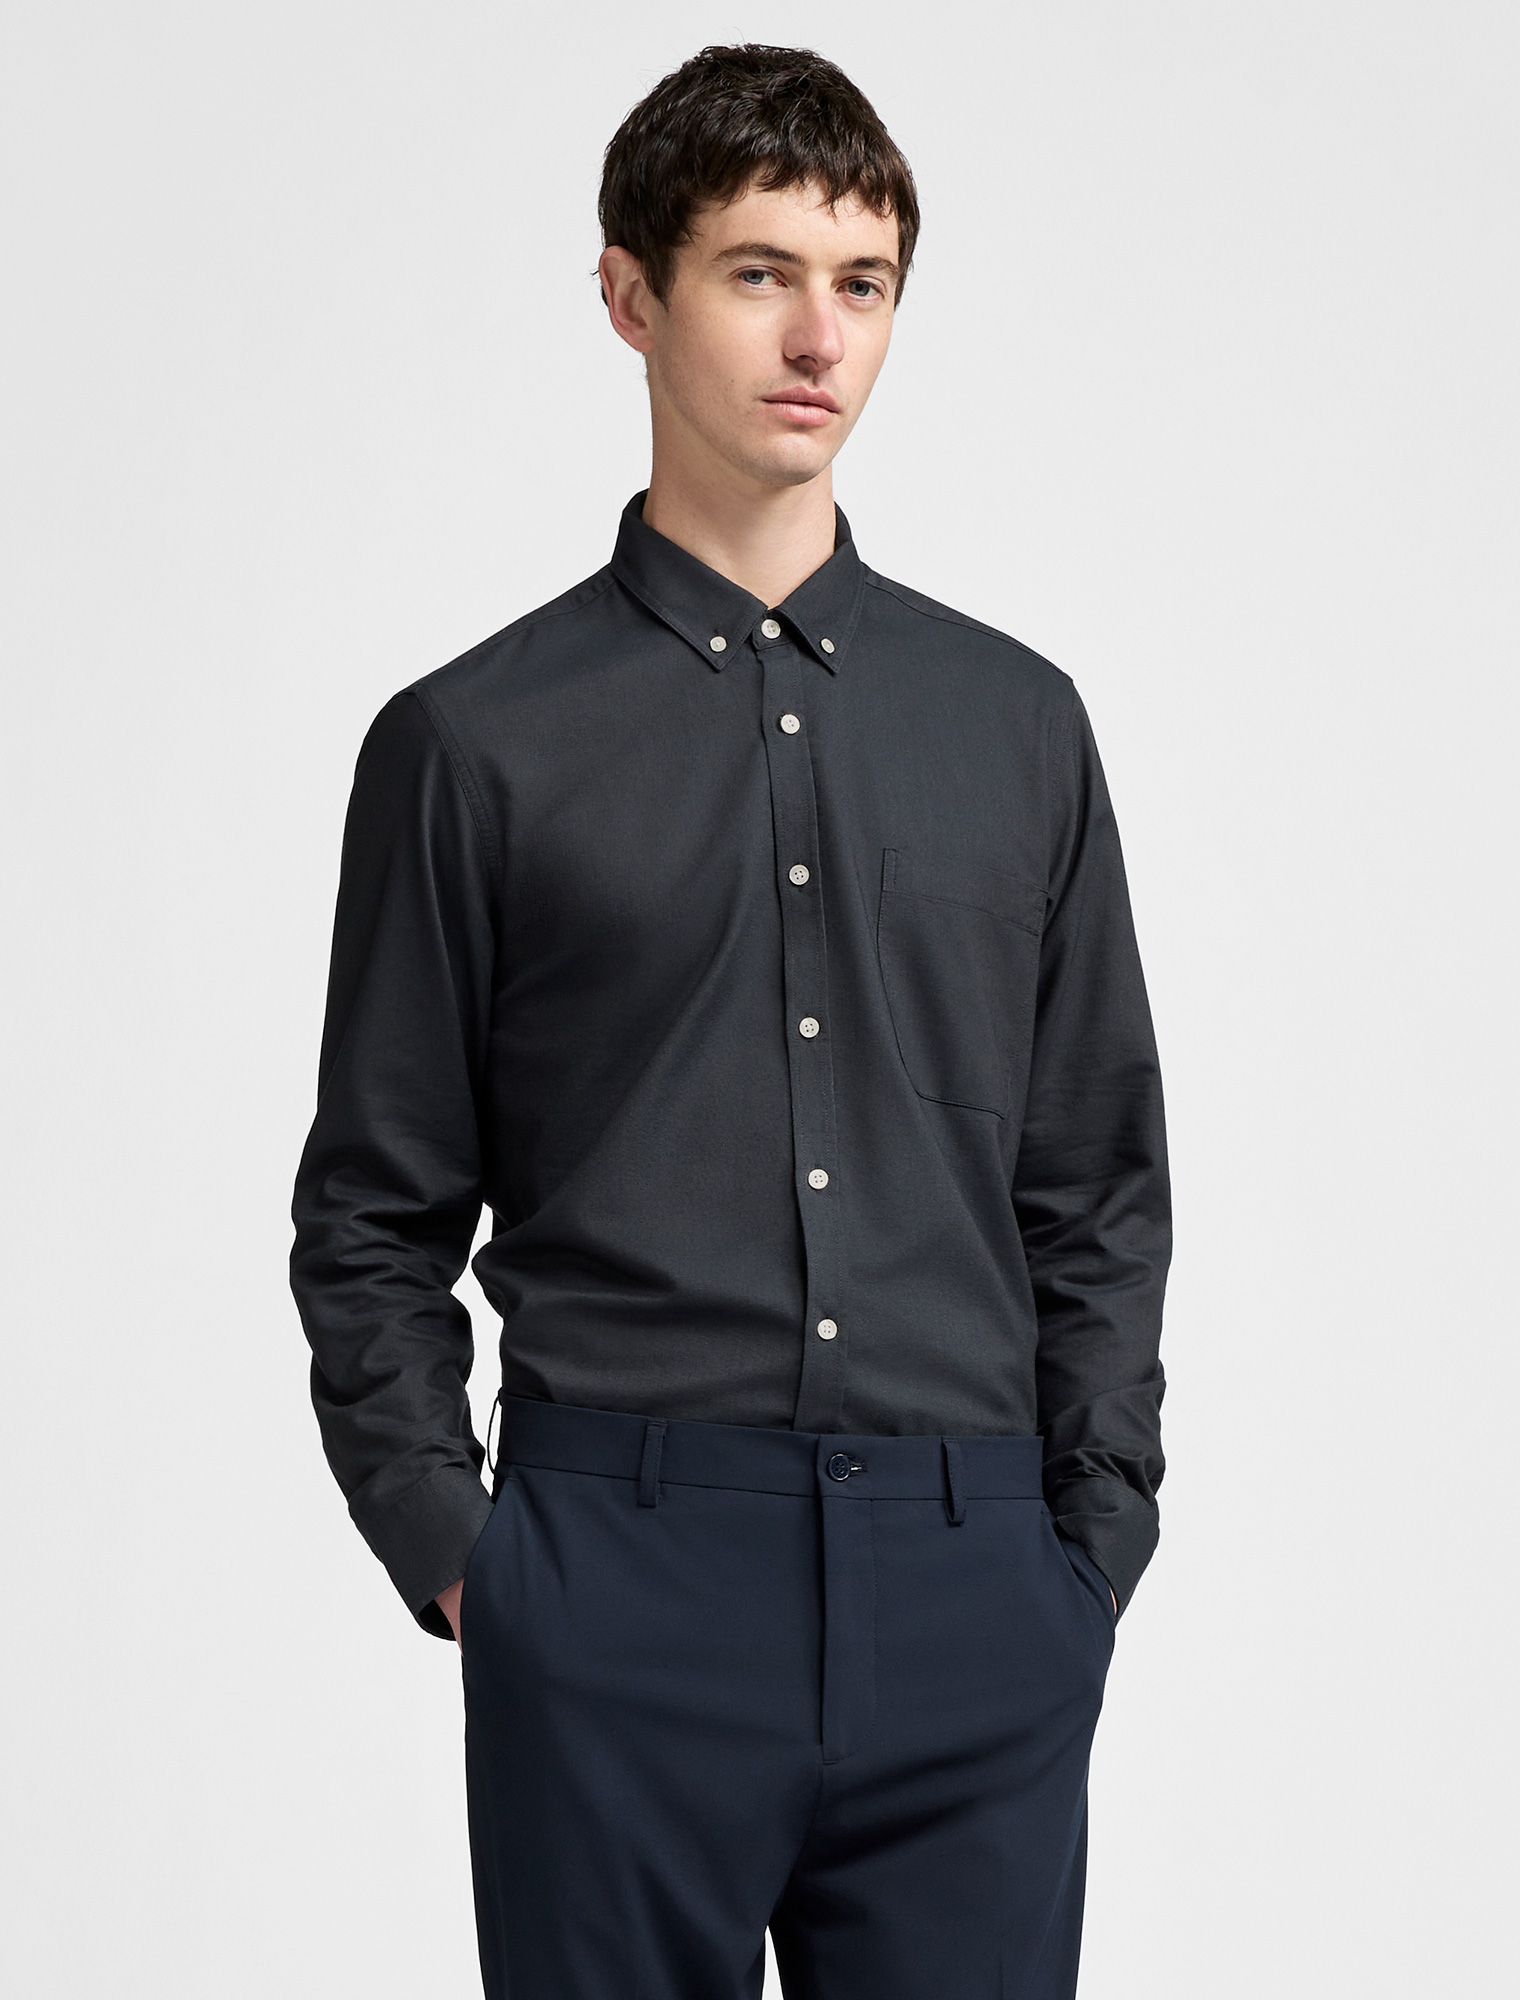 Men's Long Sleeve Oxford Shirt - Charcoal Button Down